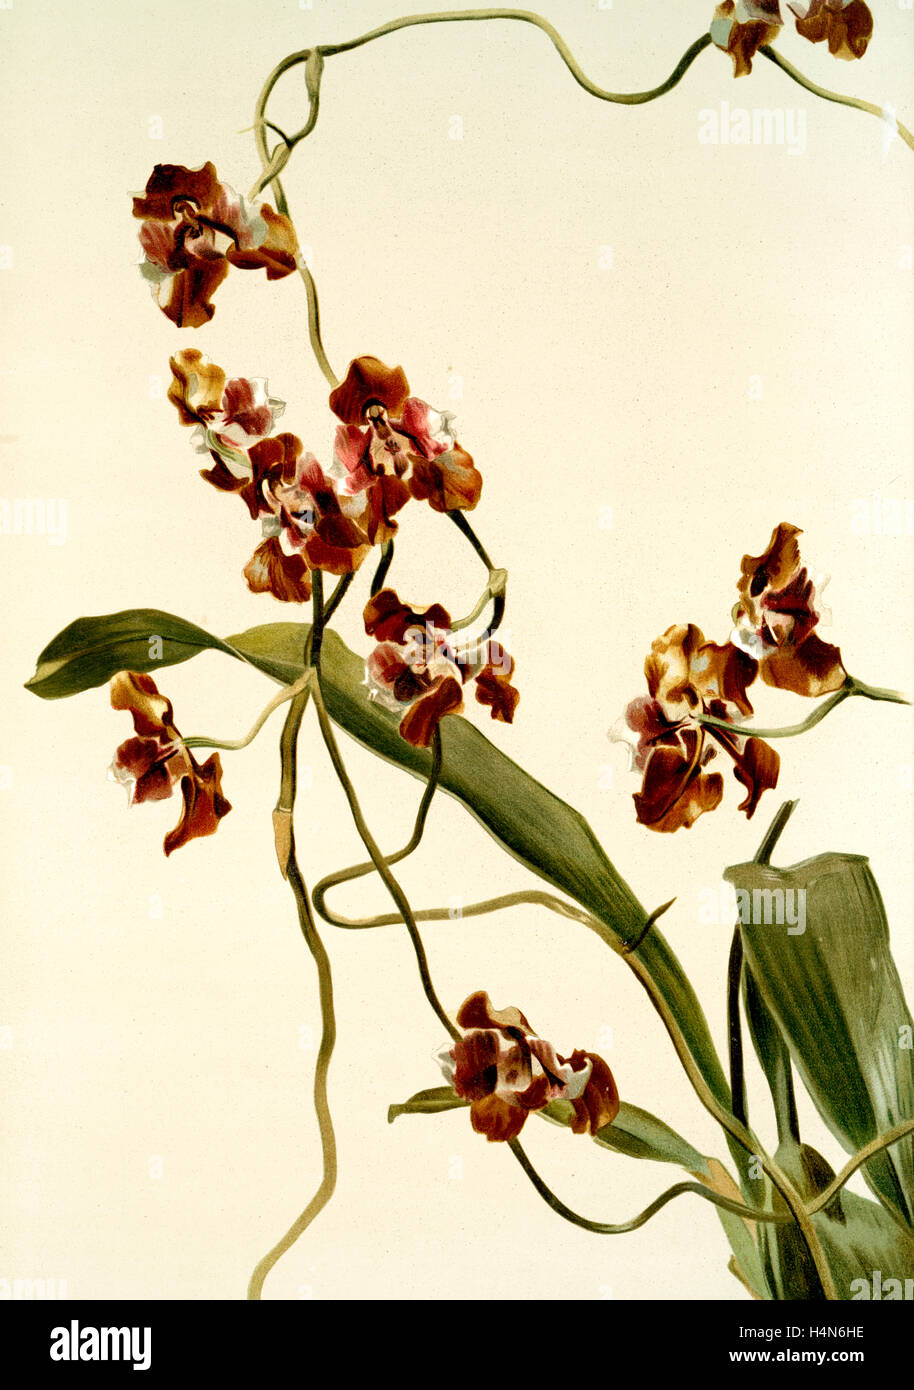 Oncidium superbiens, Sander, F. (Federico), 1847-1920, autore Leutzsch, Gustav, litografo Foto Stock